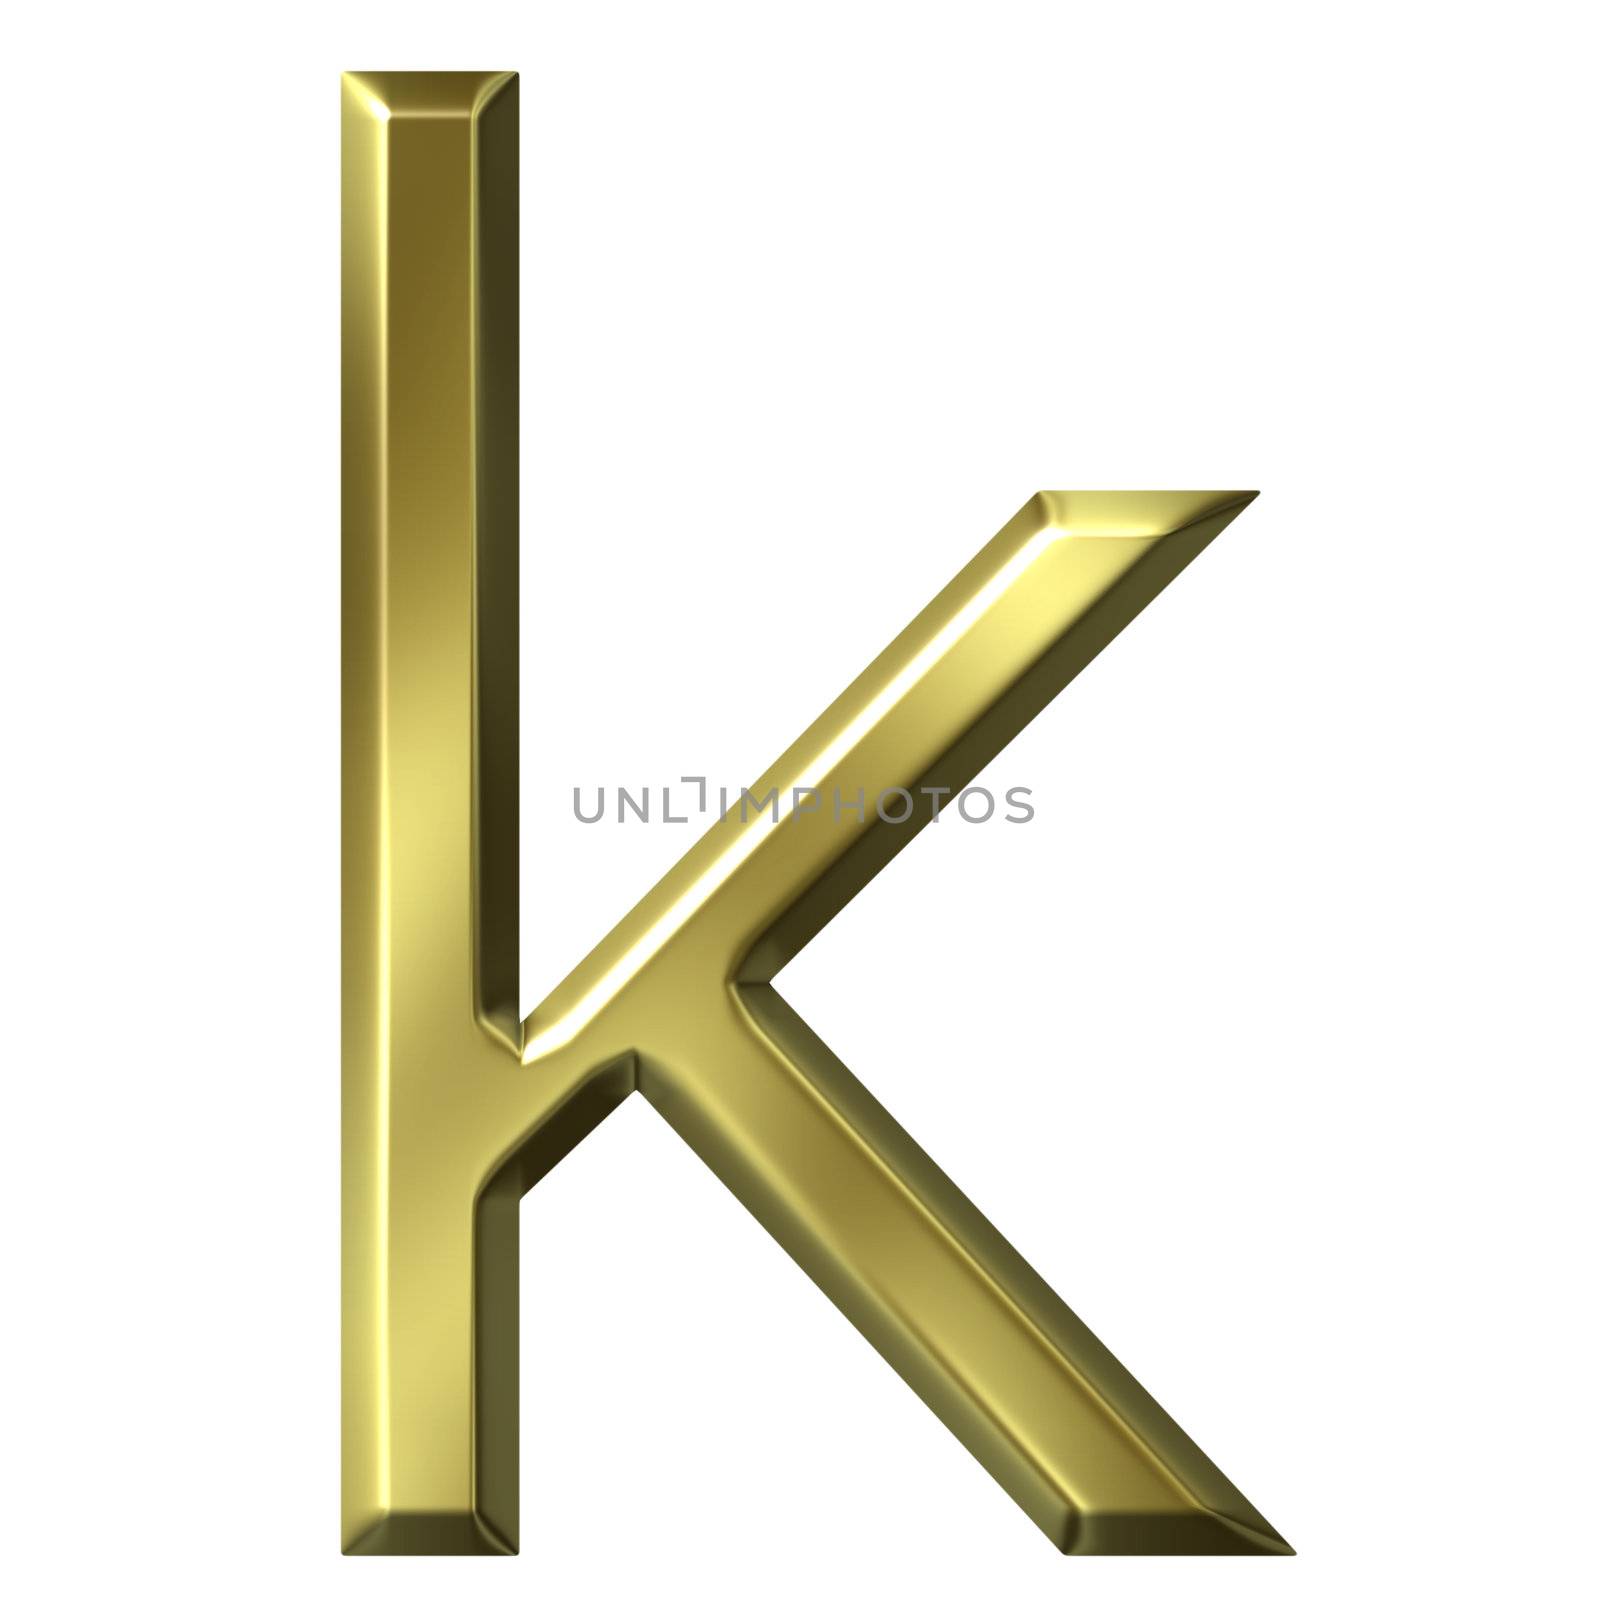 3d golden letter k by Georgios